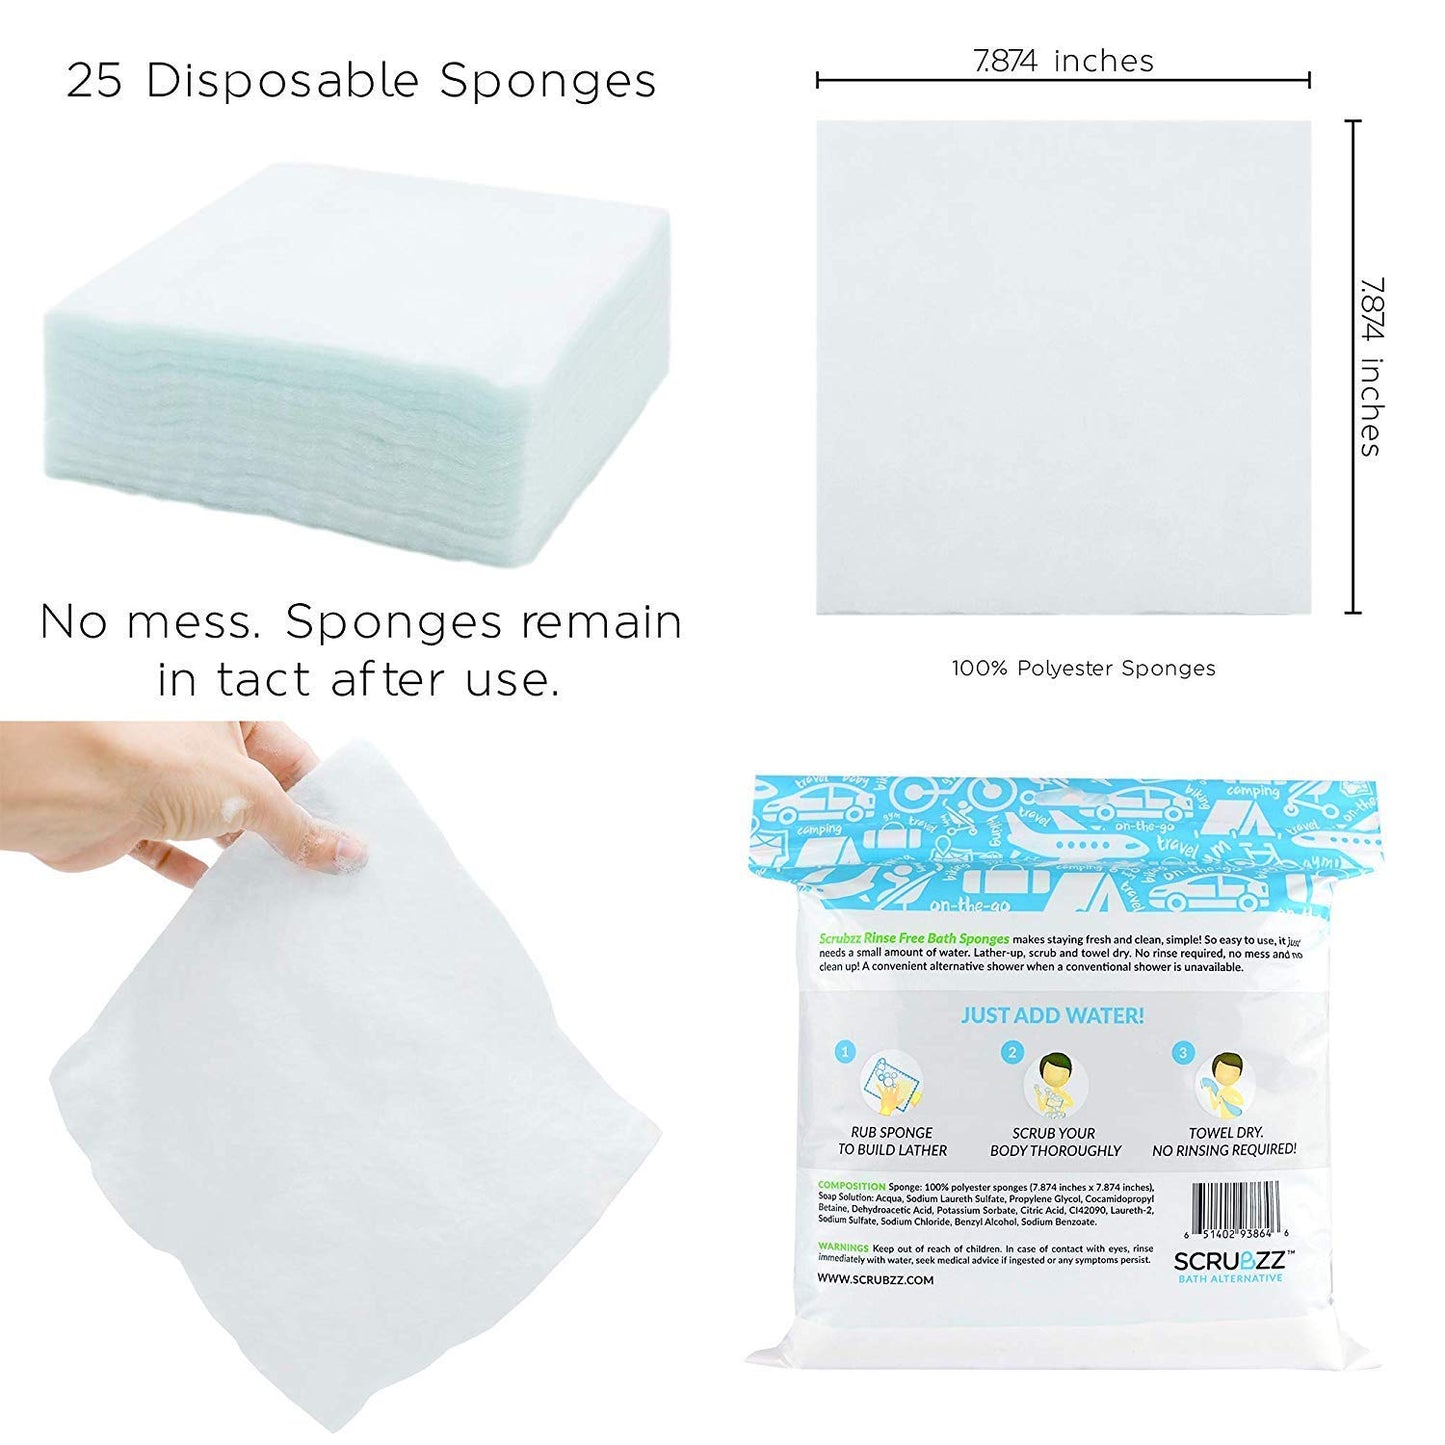 Scrubzz Rinse Free Bath Sponge, No Rinse Bathing Wipes - 25 Count - 1 Pack